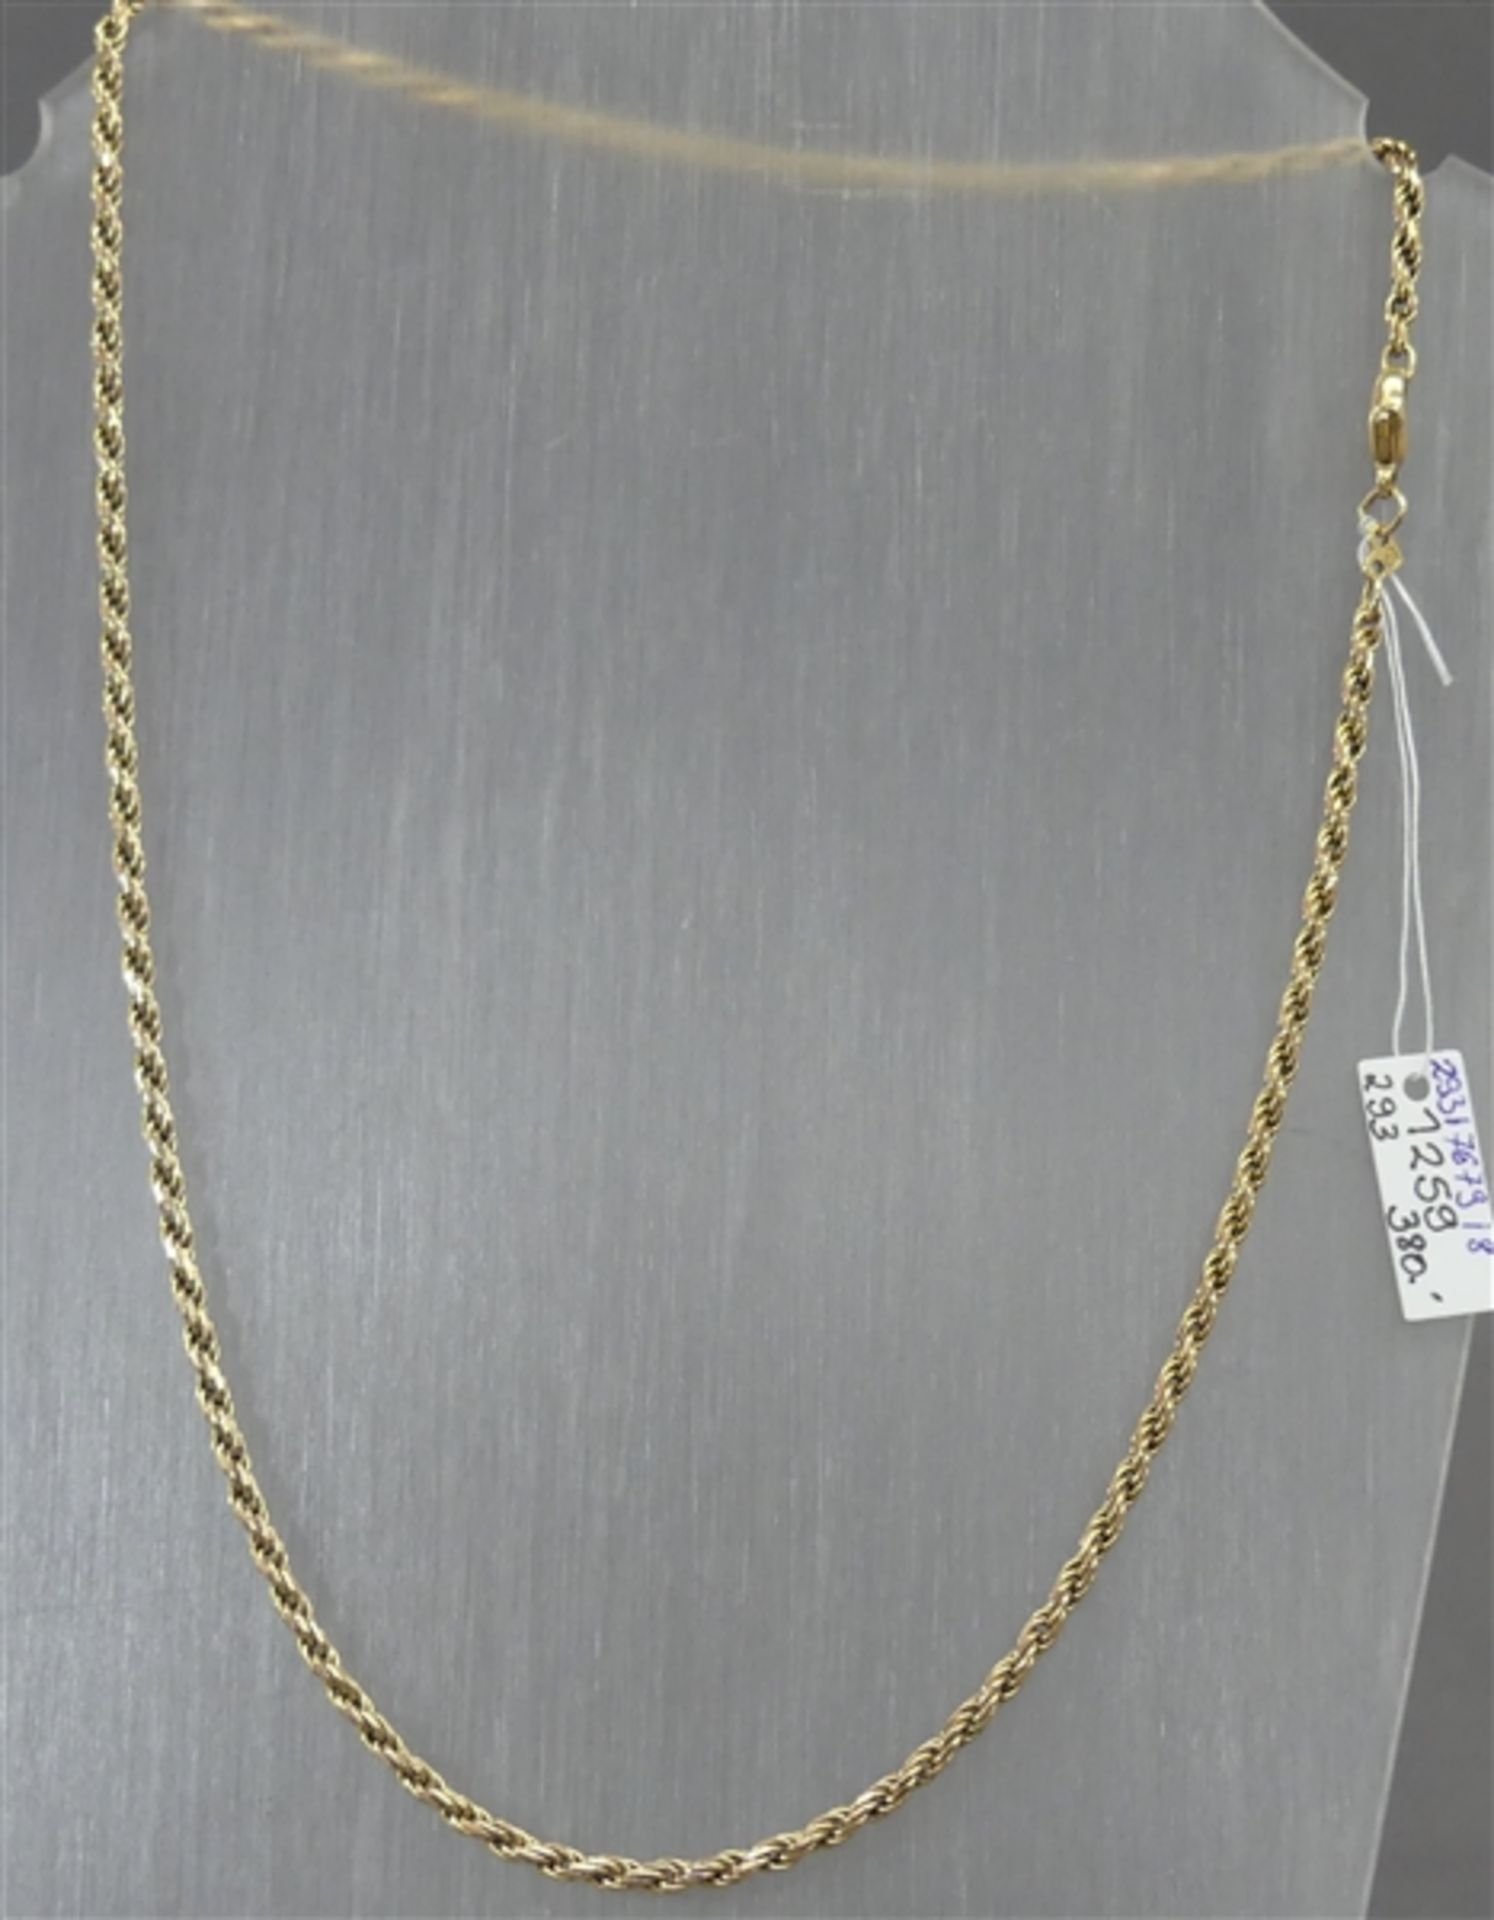 Halskette 14 kt. Gelbgold, Kordelform, ca. 14 g schwer, l 45 cm,